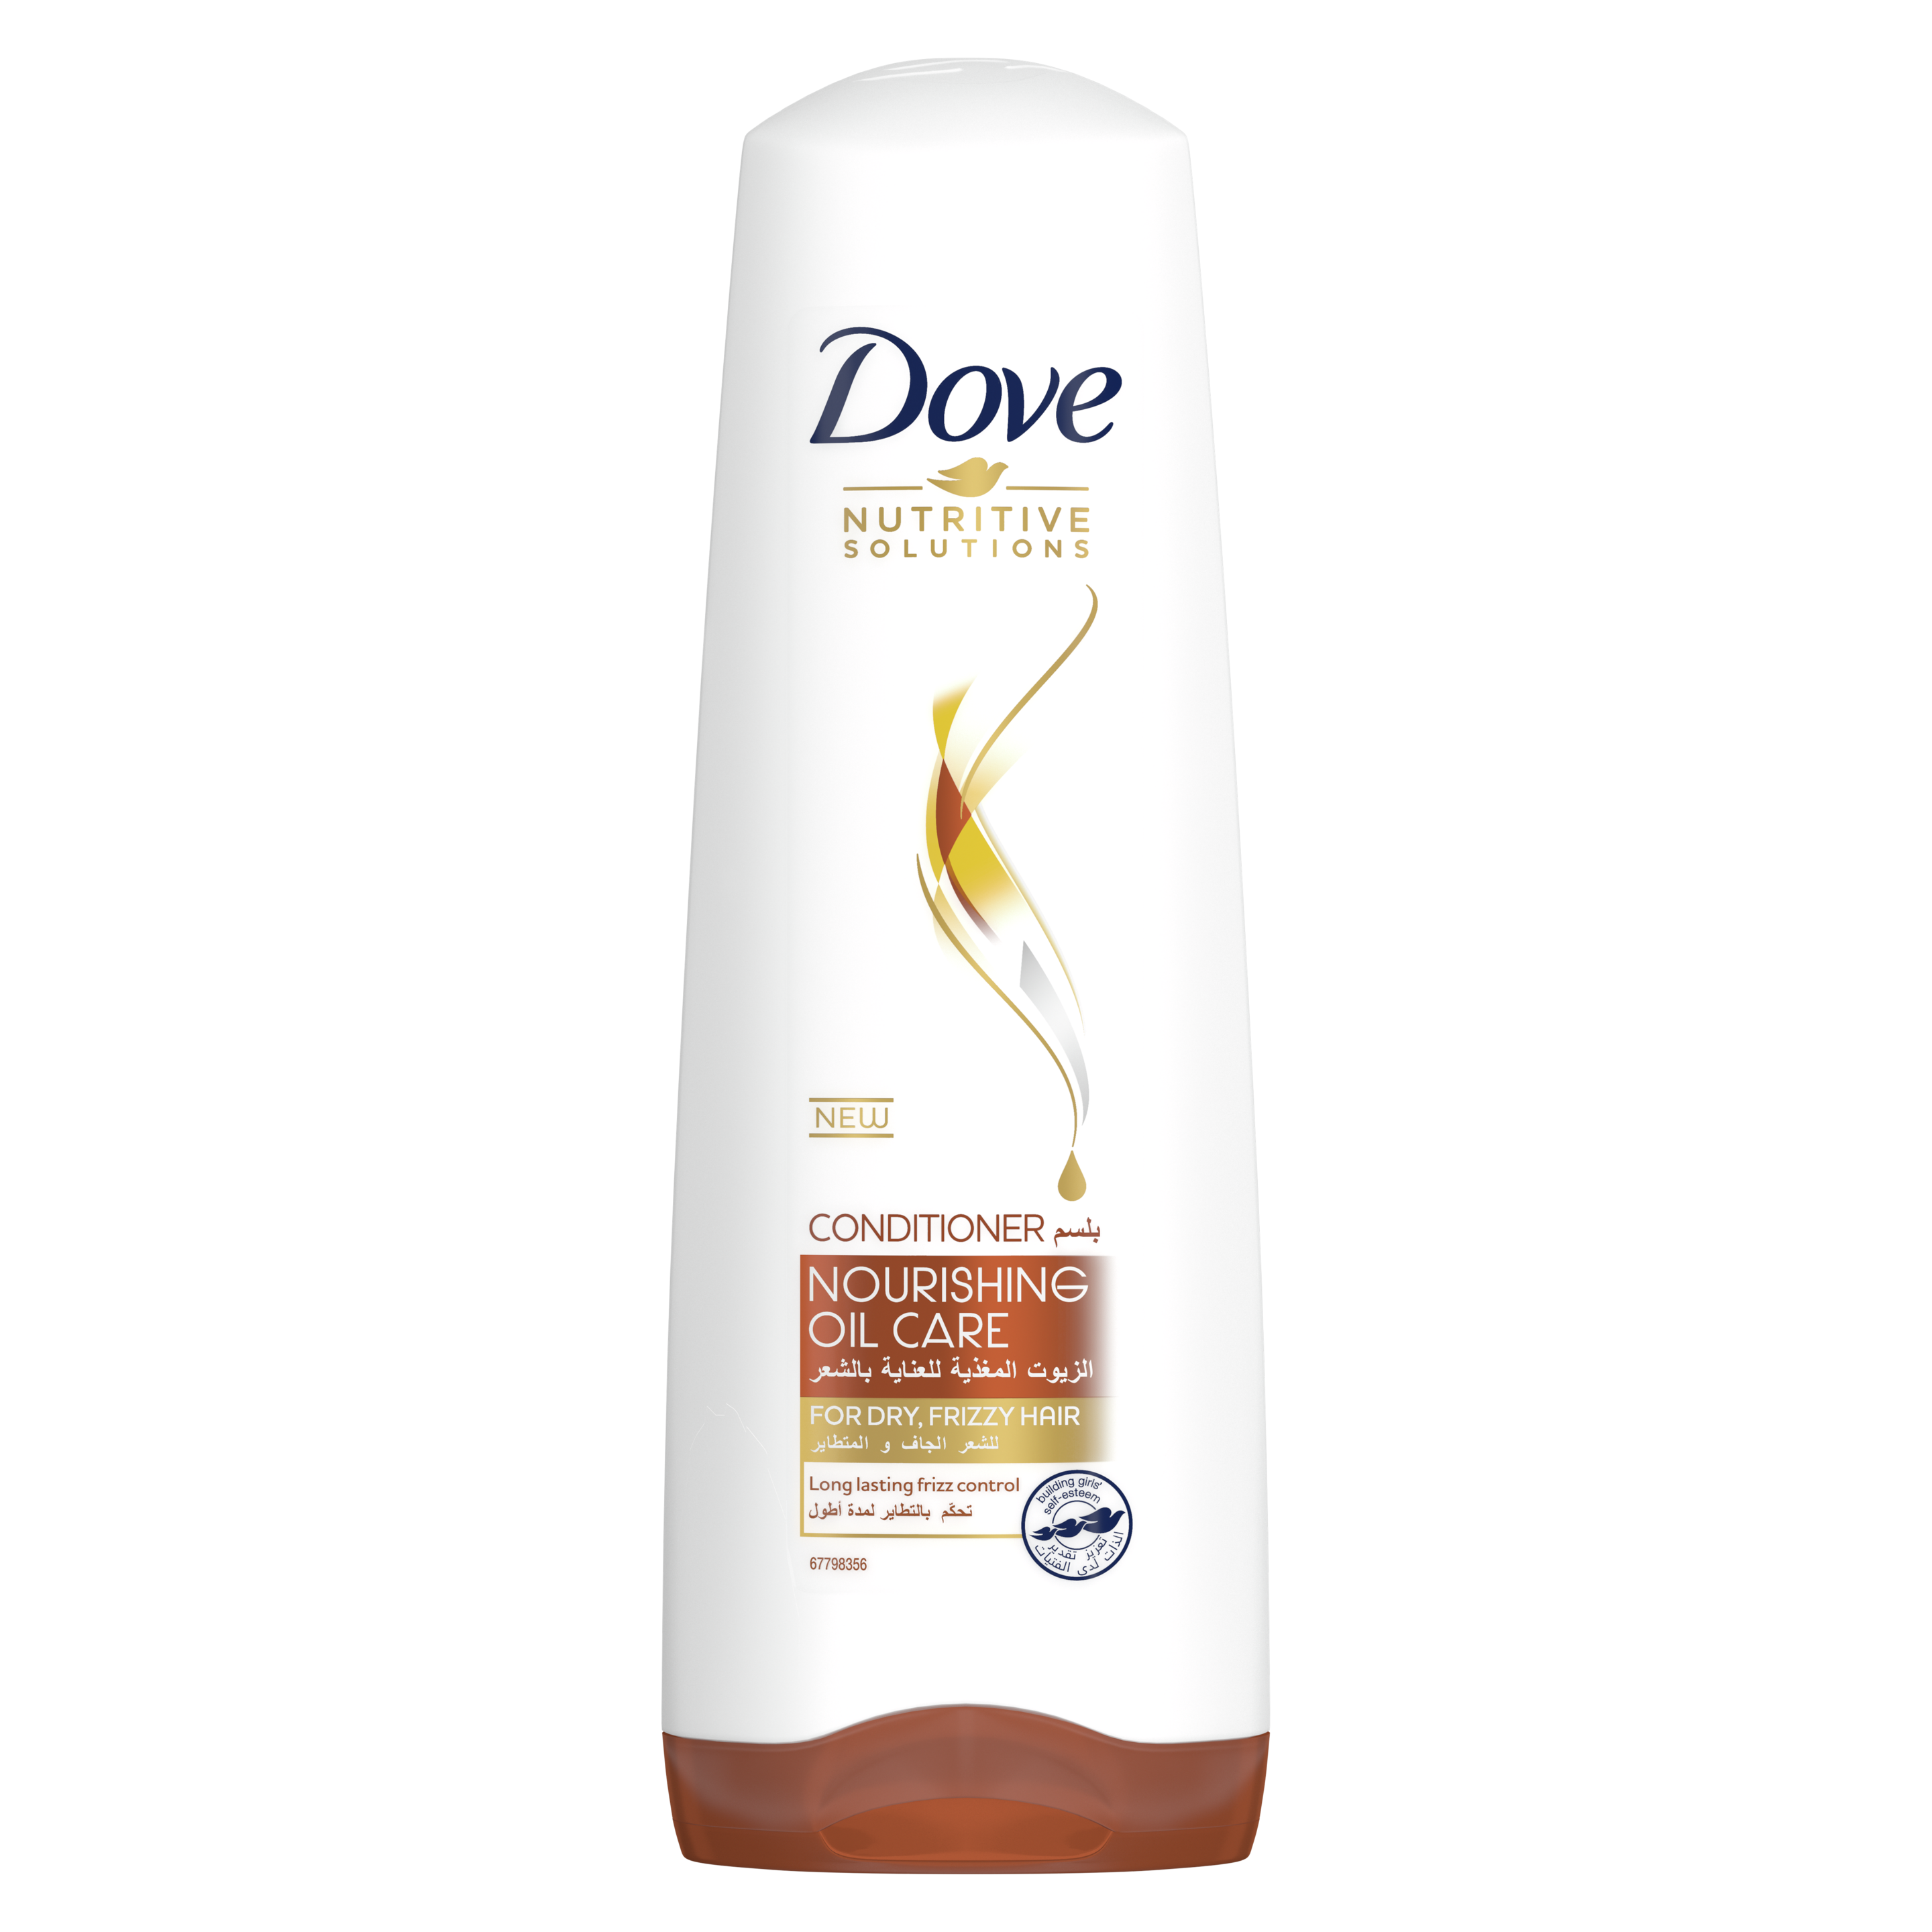 Dove Nutritive Solutions Nourishing Oil Care Conditioner 350ml